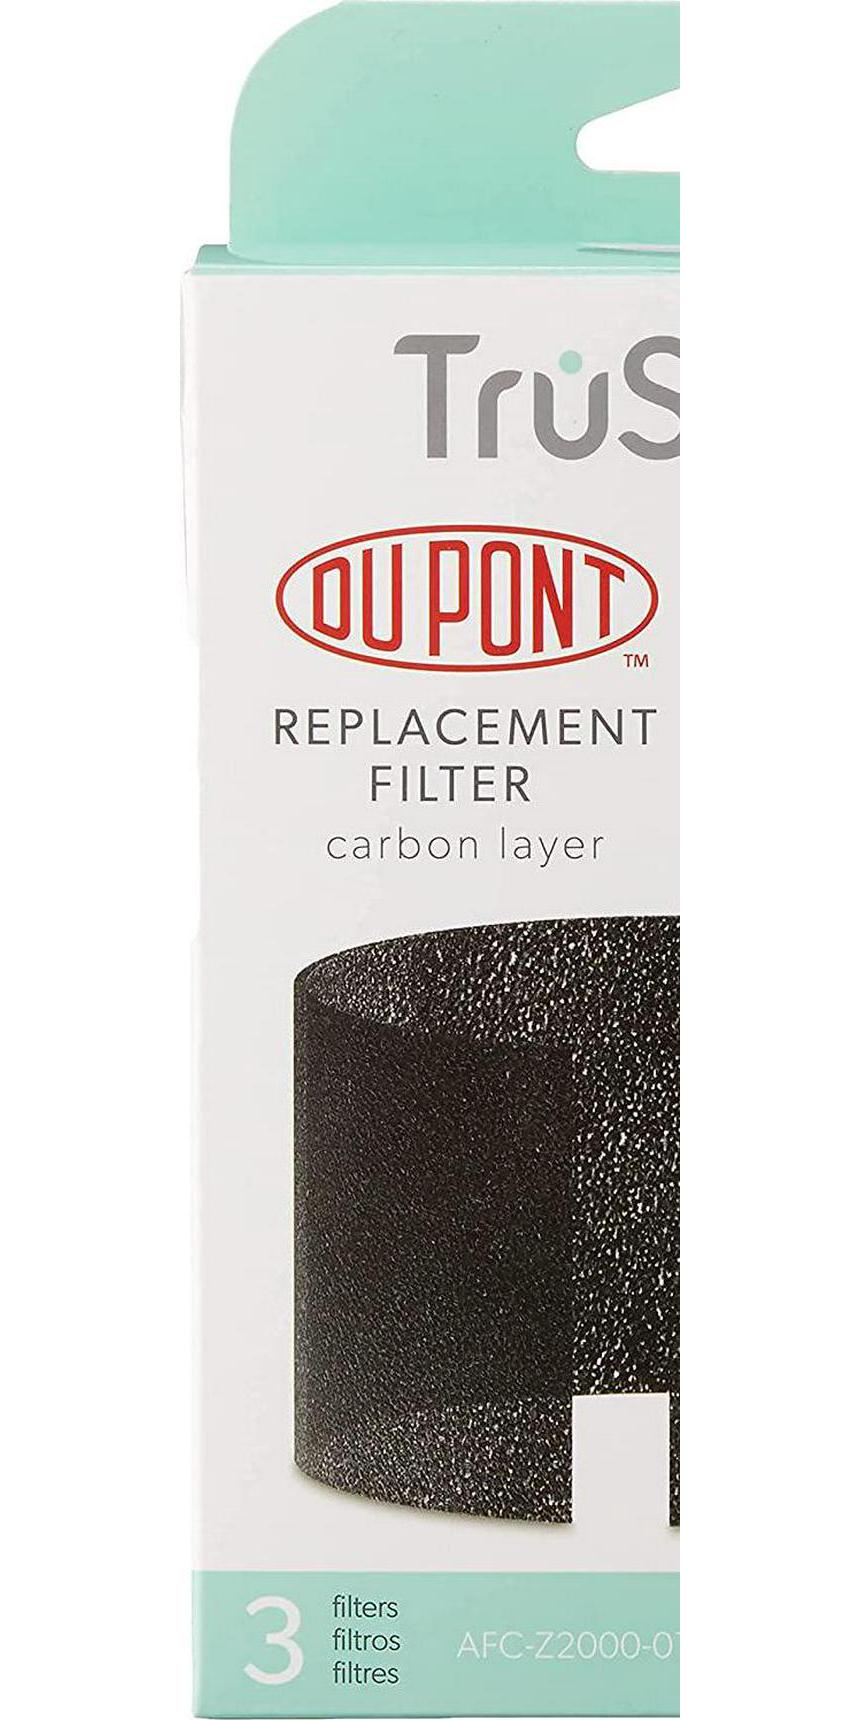 Leitz, Leitz Dupont Carbon Layer Replacement TruSens Z-2000 Air Purifier, 3 Pack, One Size, Black